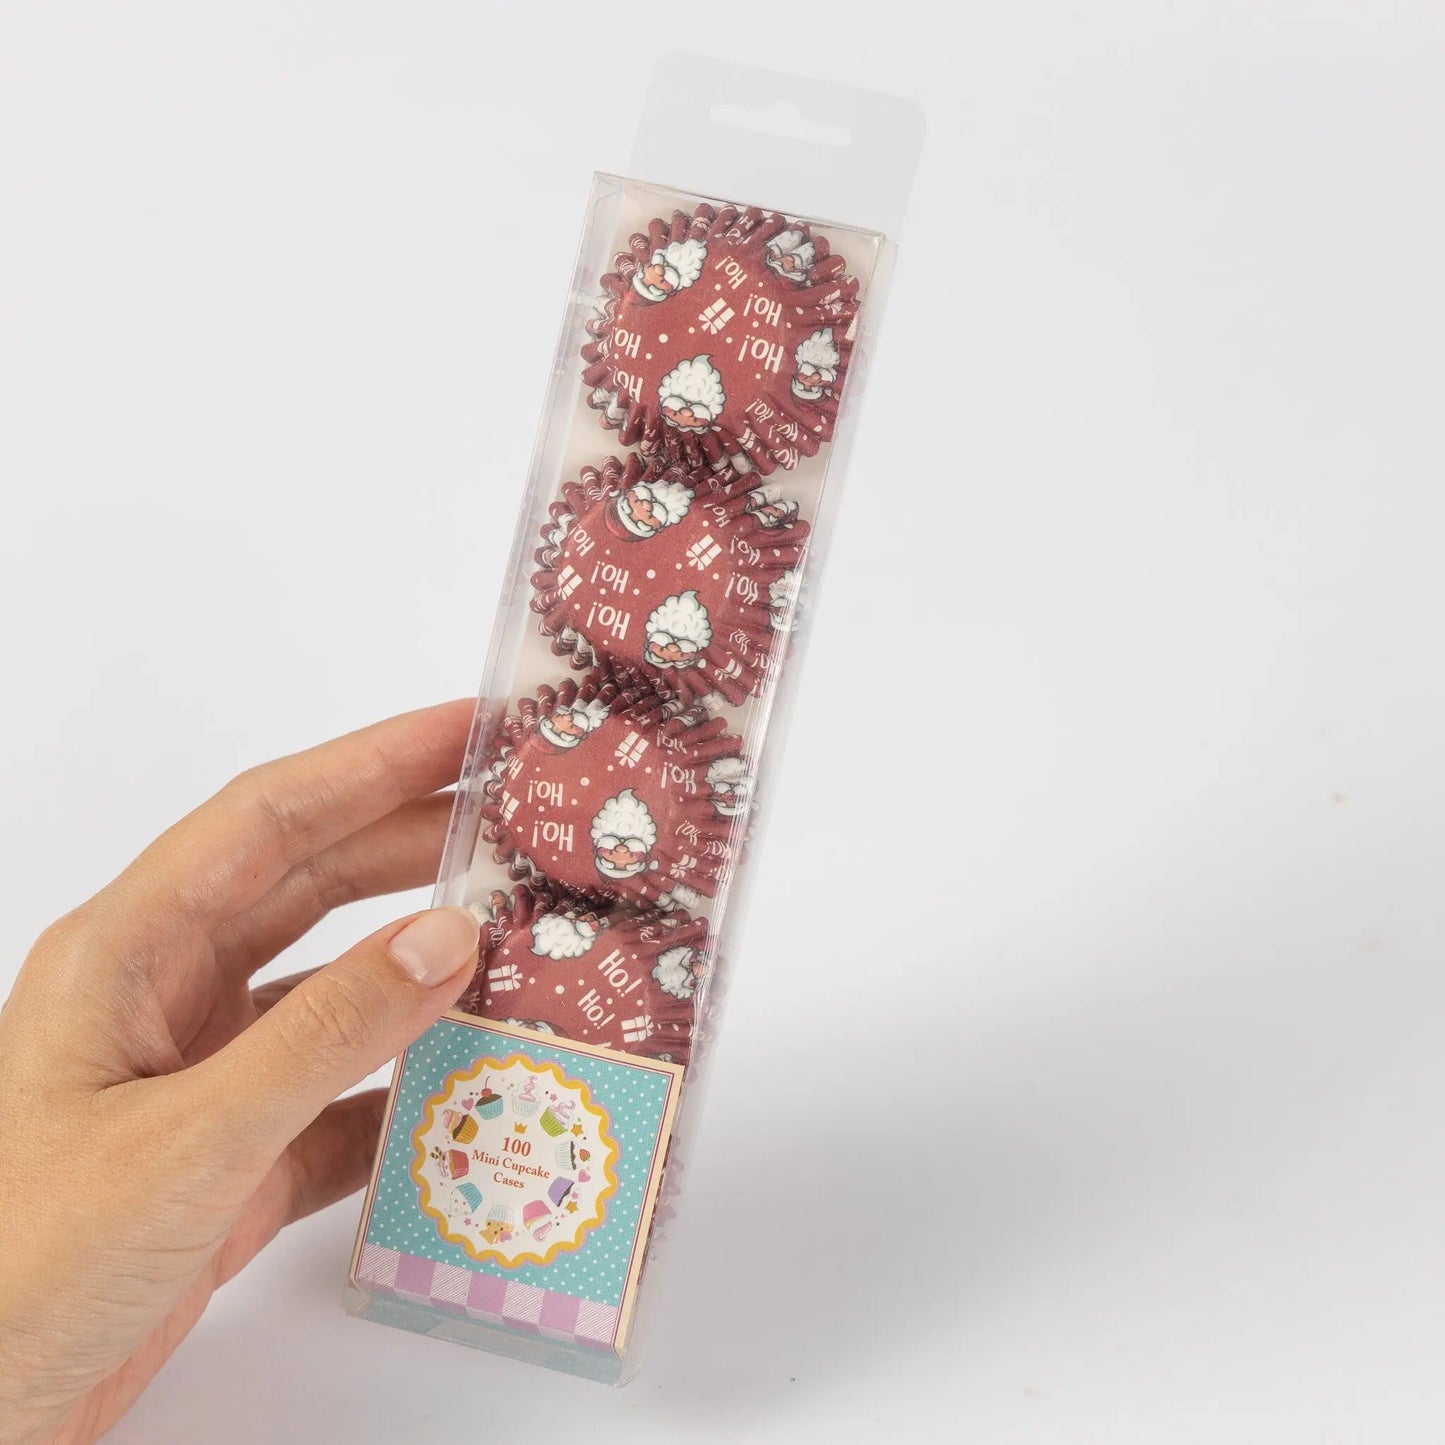 100 Mini Cupcake Cases Baking Muffin Cake Petits Fours Christmas Designs Keechi & co.